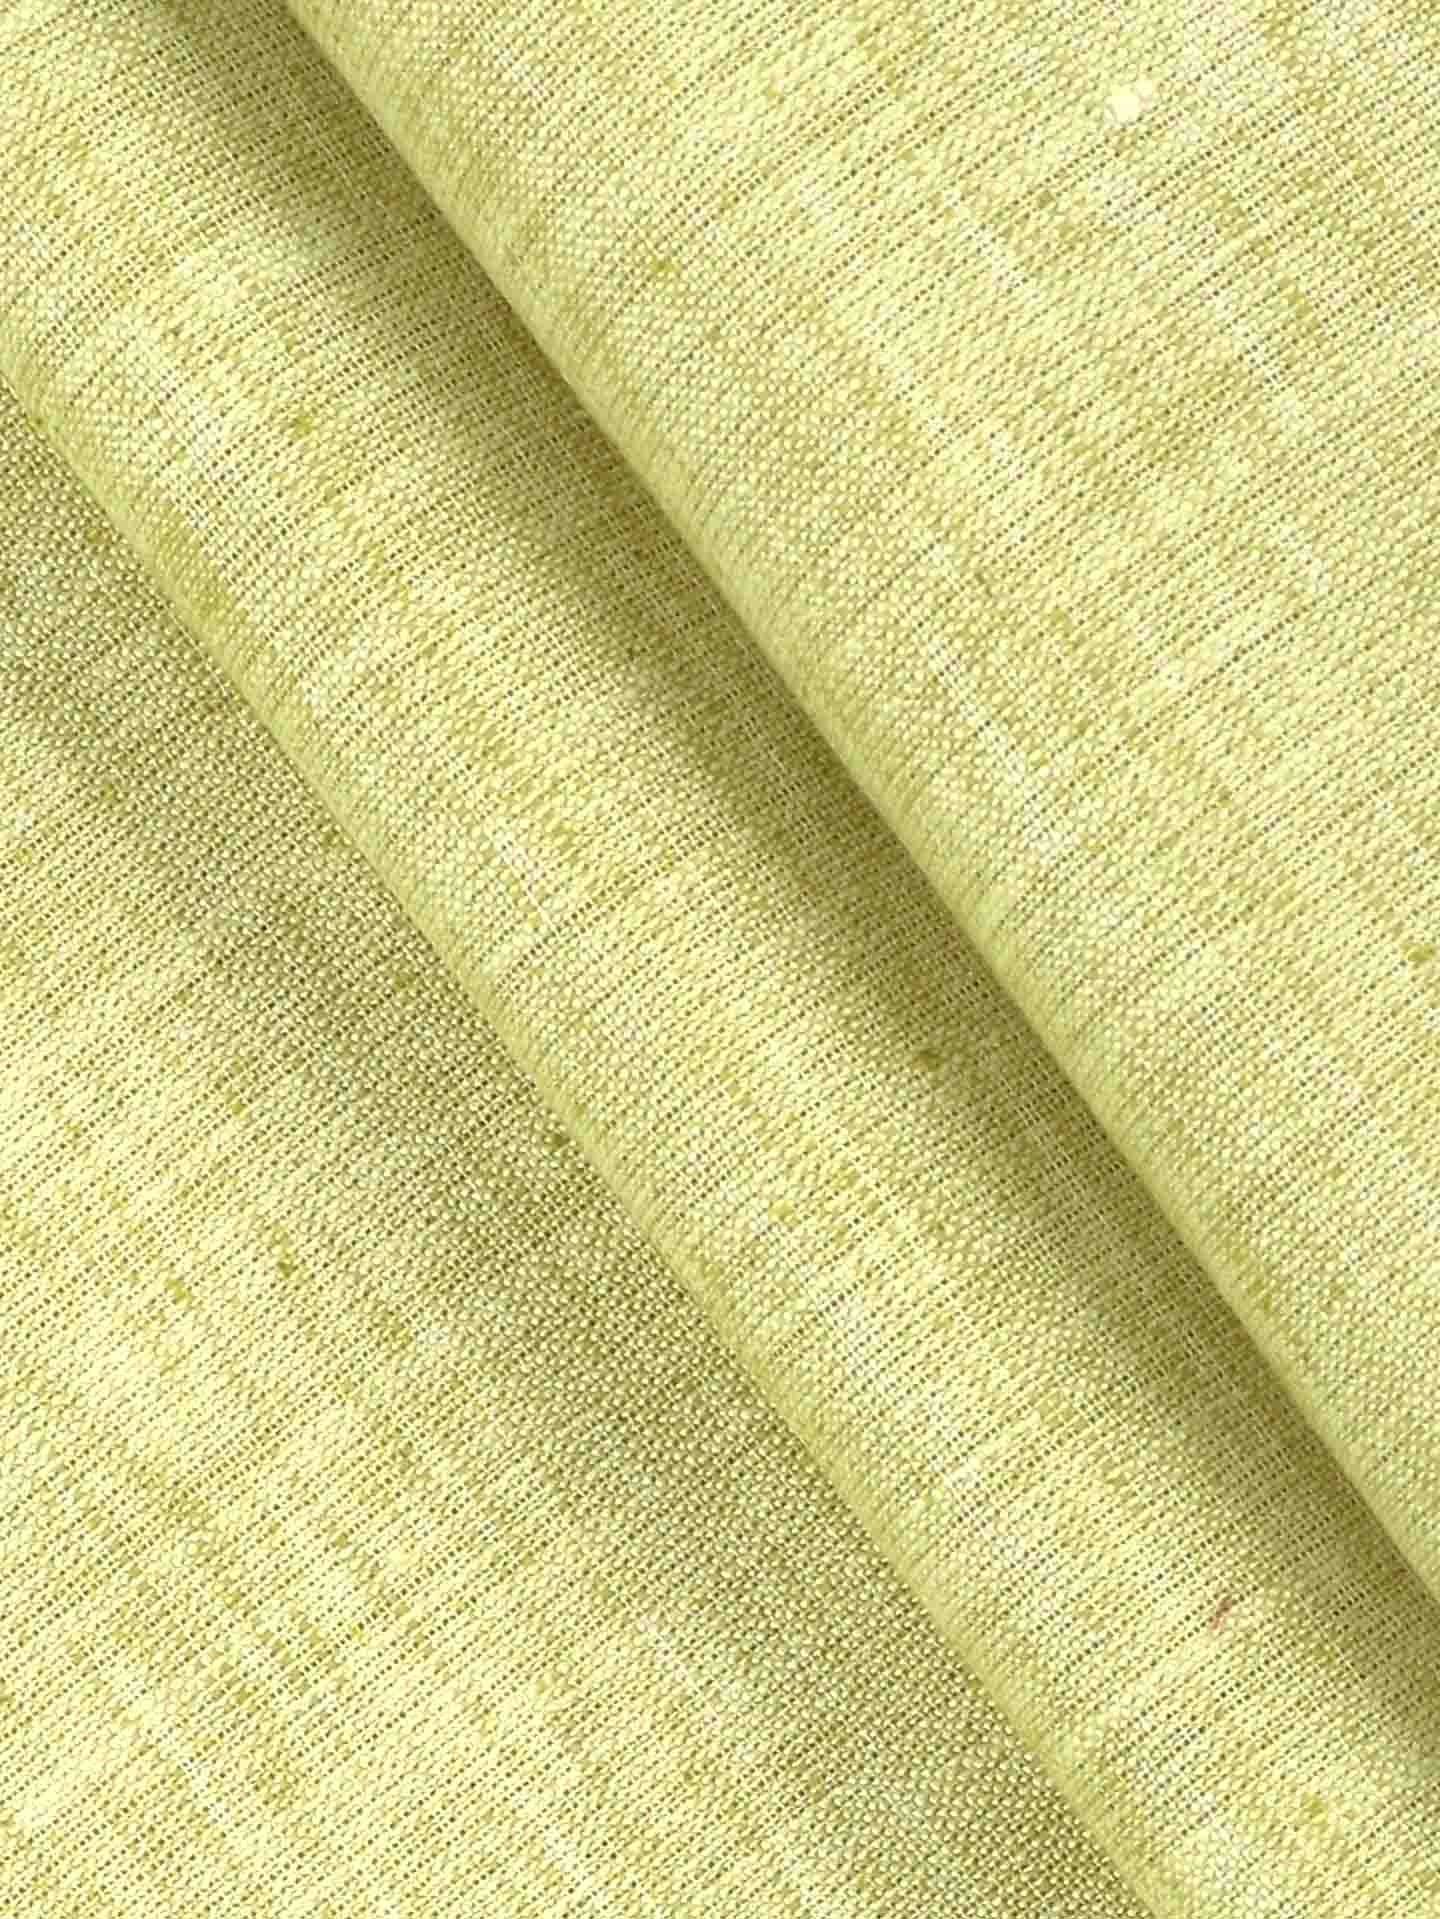 Cotton Blend Olive Green  Colour Kurtha Fabric Lampus - CAPC1160-26